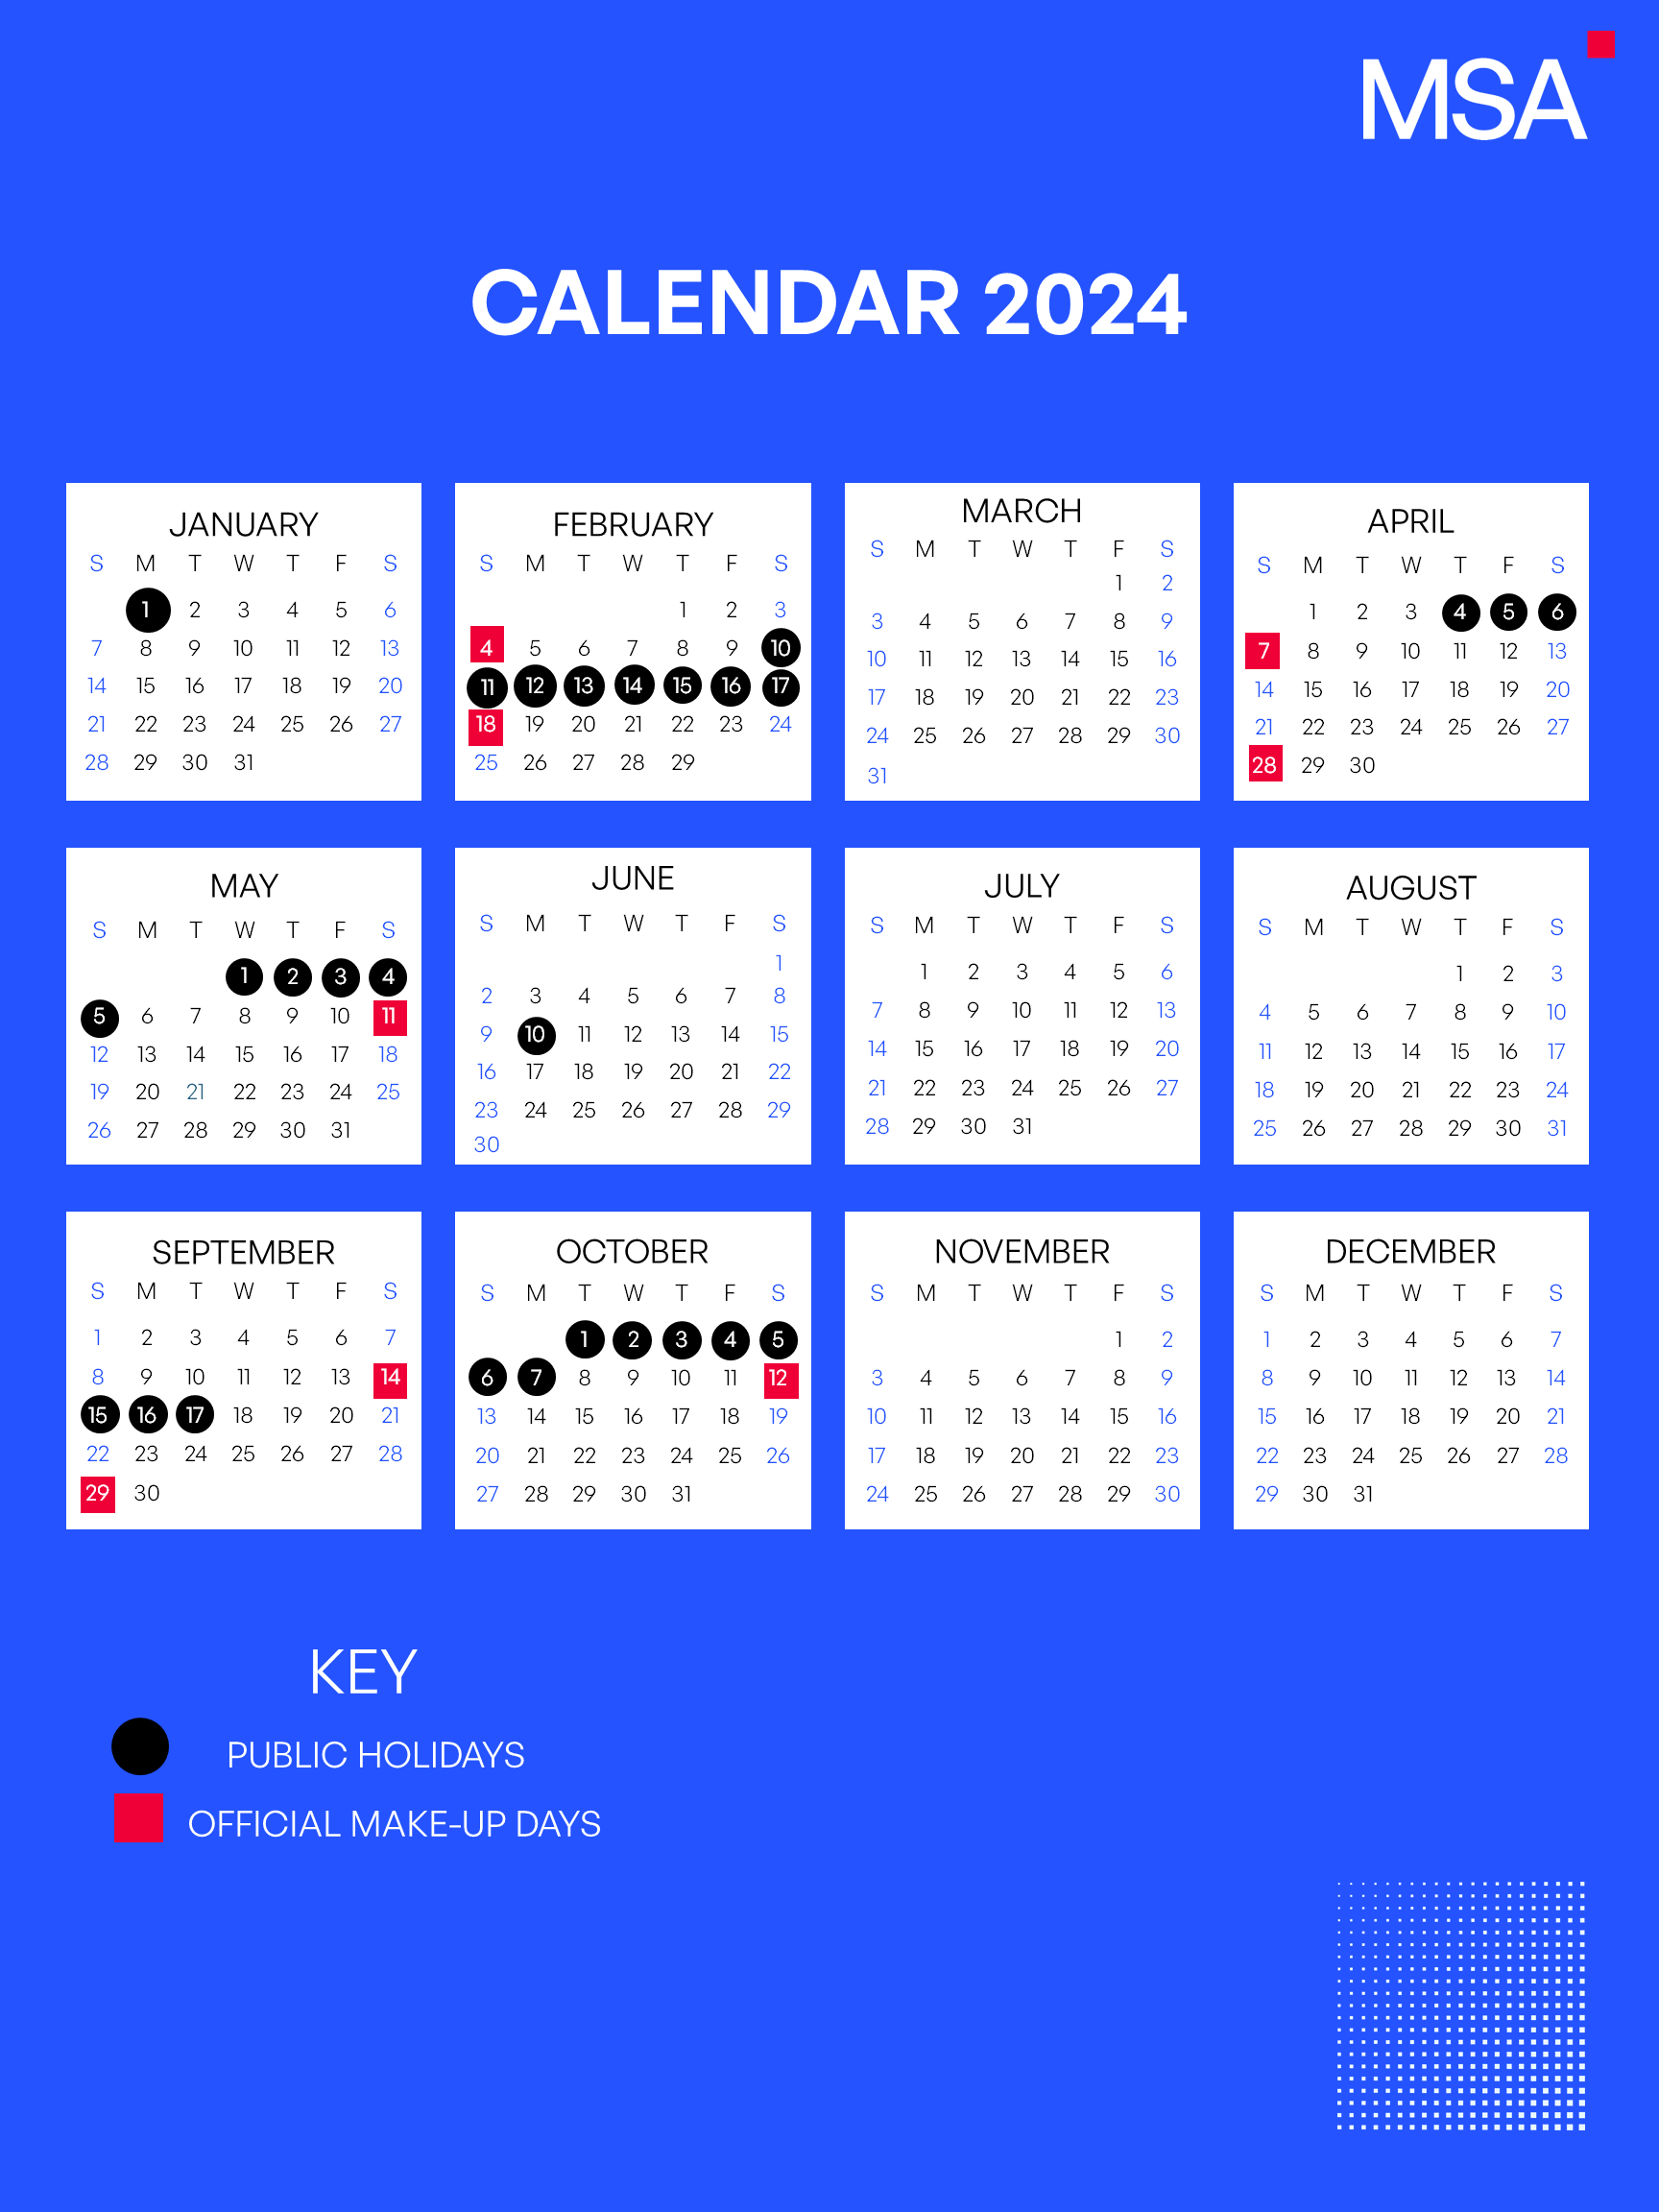 2024 MSA Calendar Rebrand v2